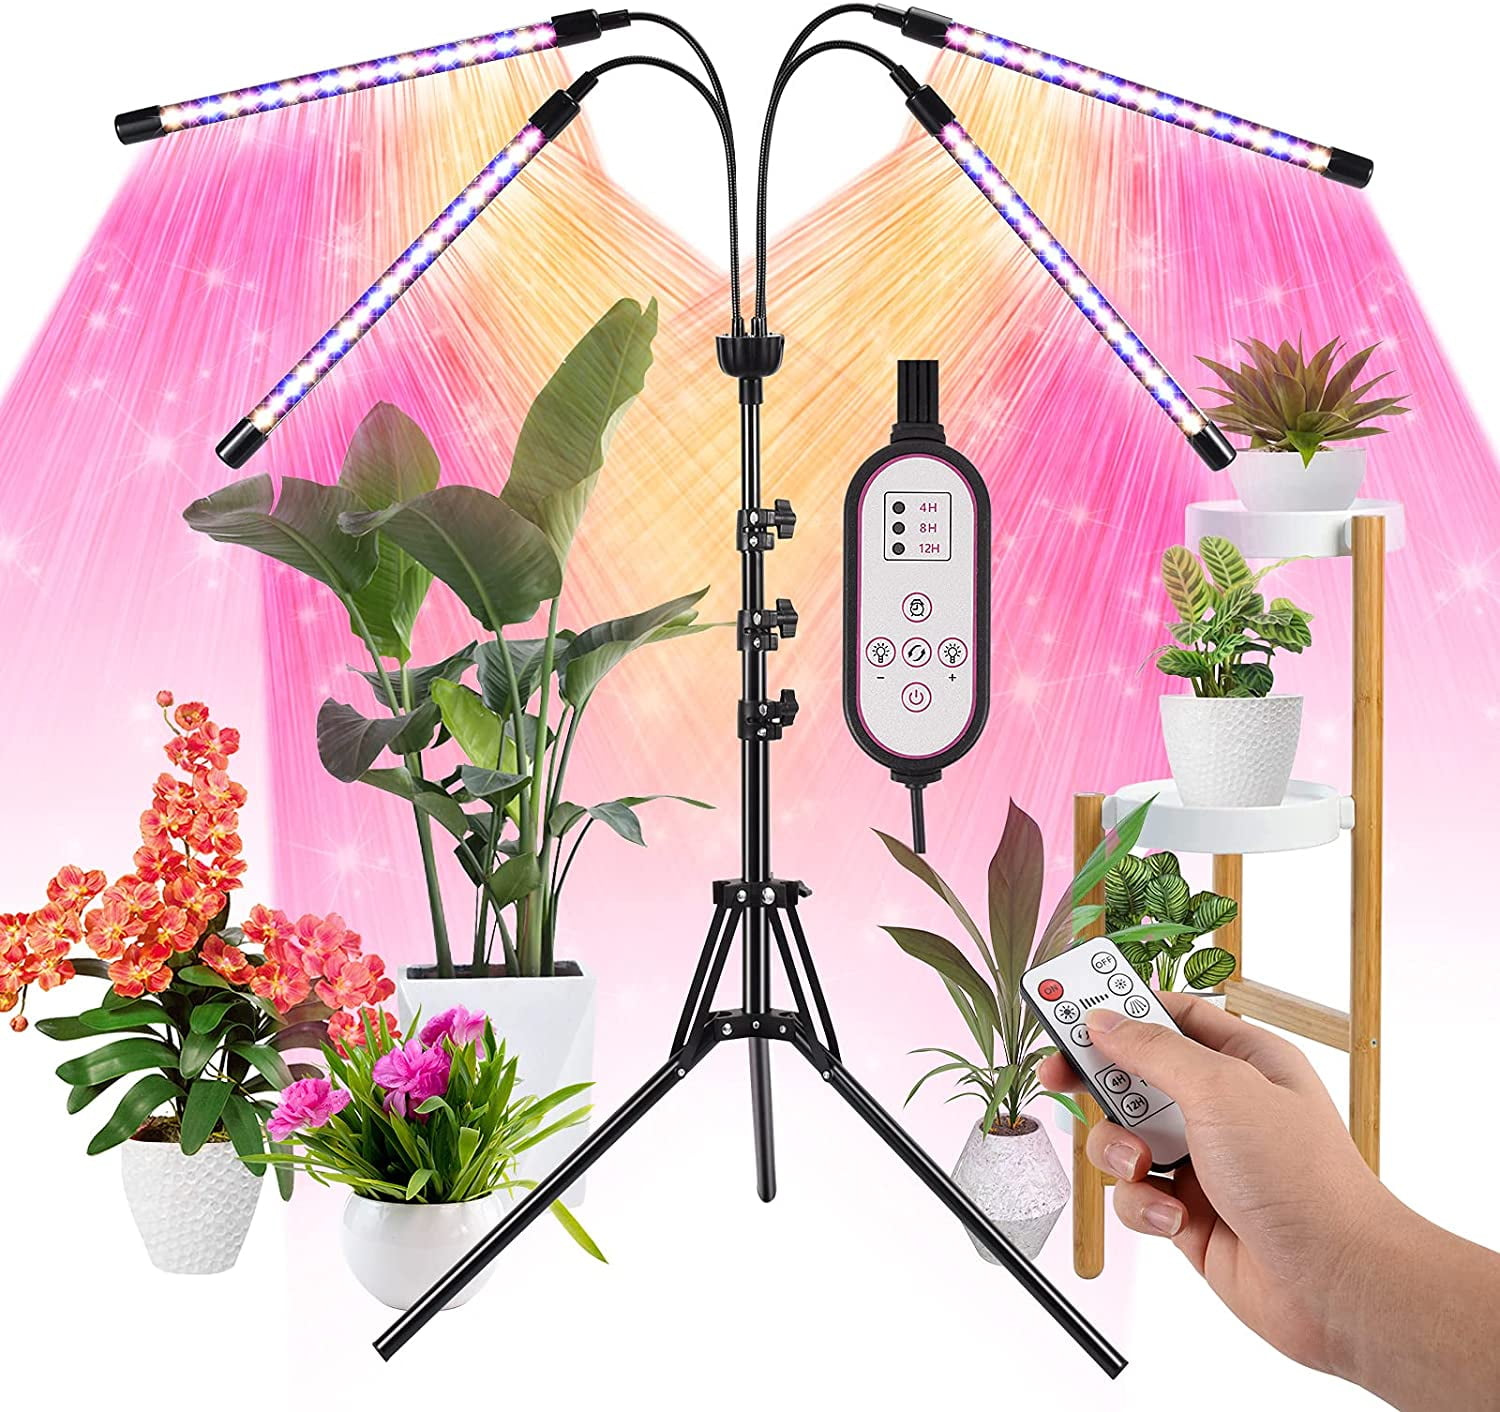 20W Grow Light LED Spectrum for Indoor House Plants Garden Dual Head Lamps US 